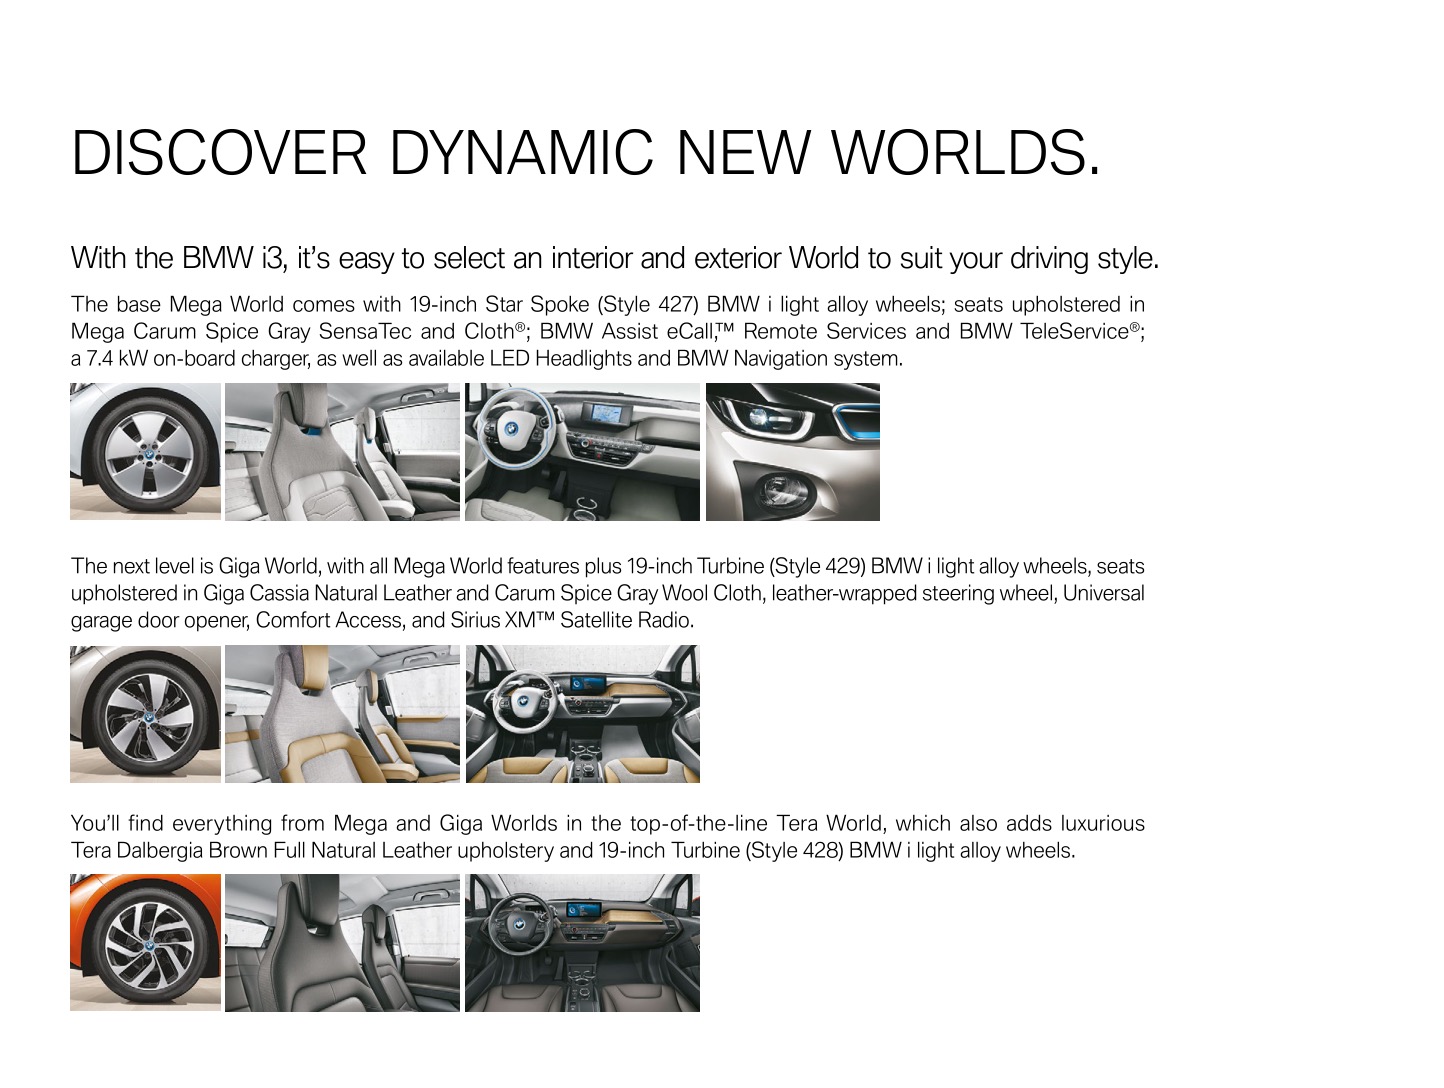 2014 BMW iSeries Brochure Page 12